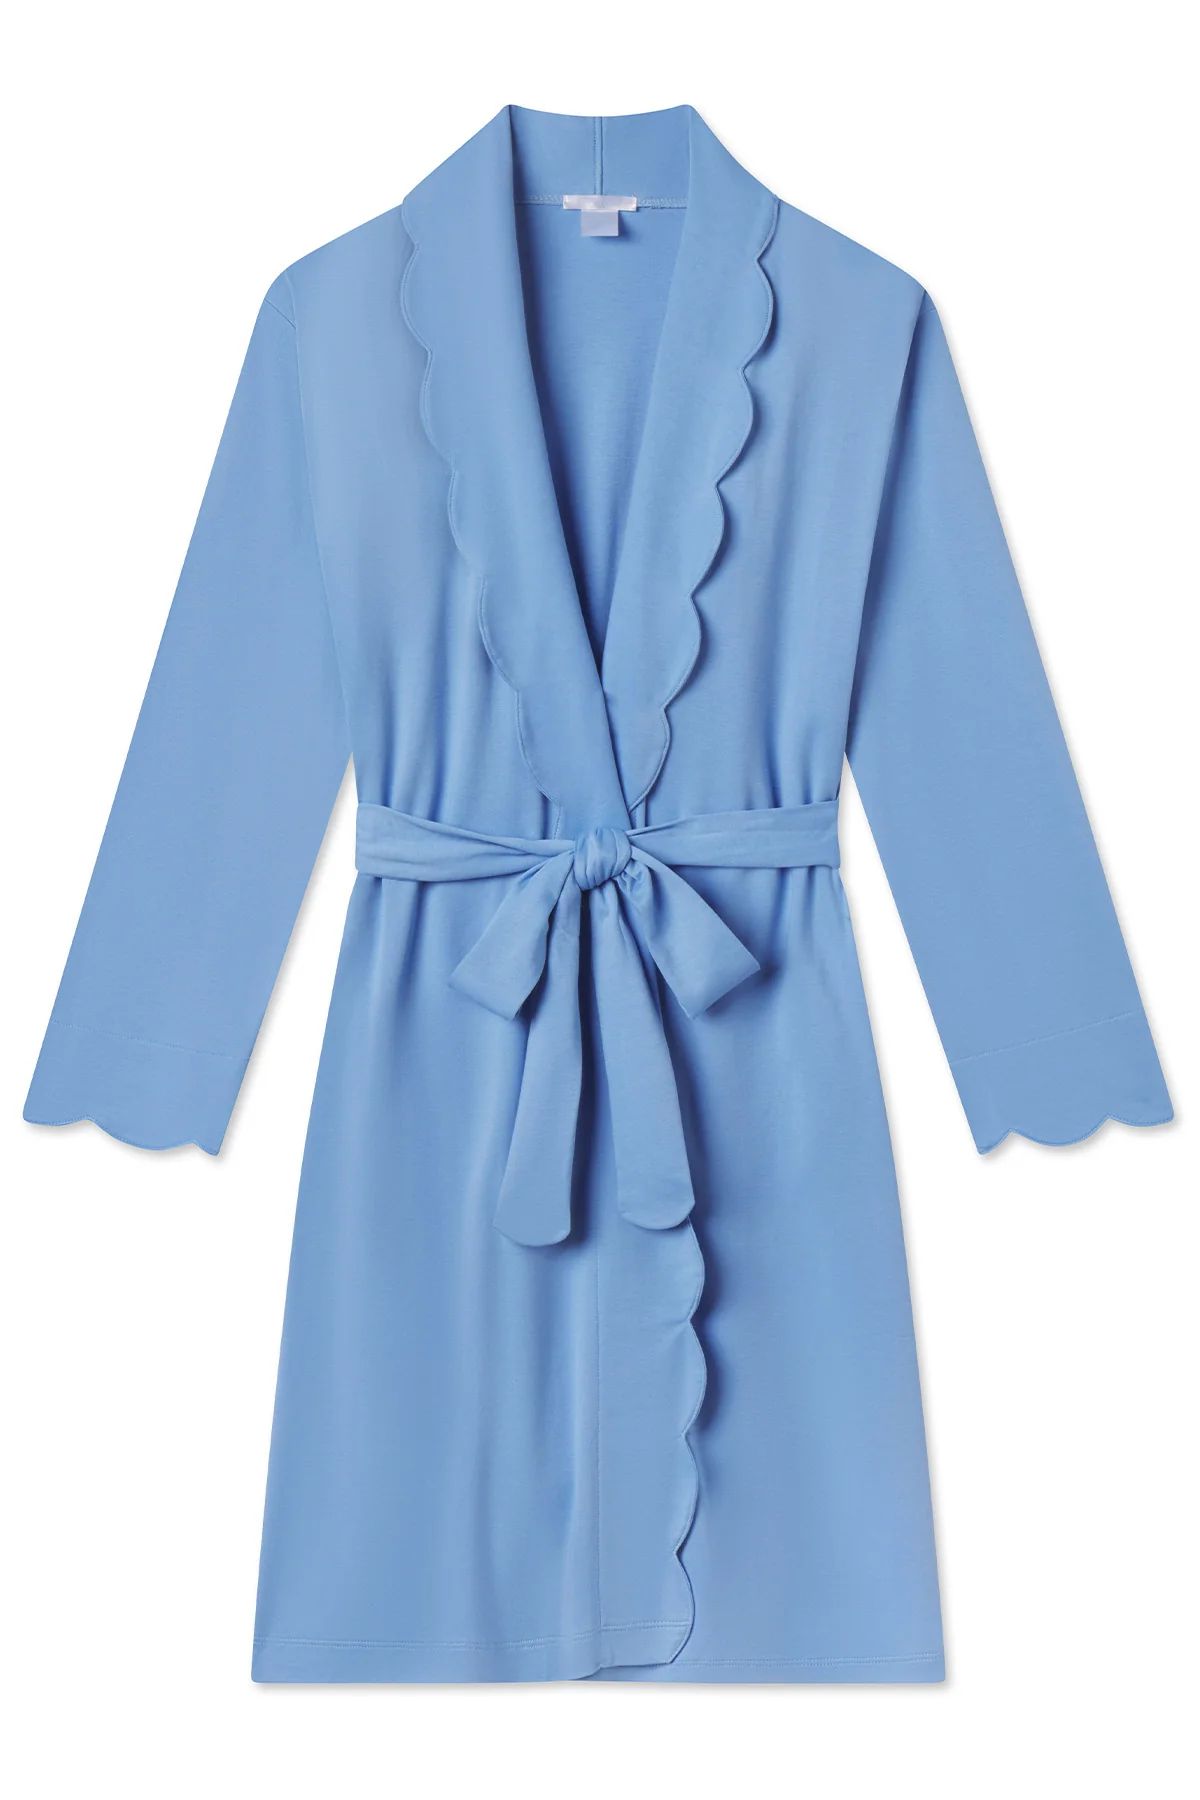 Pima Scallop Robe in Baltic Blue | Lake Pajamas